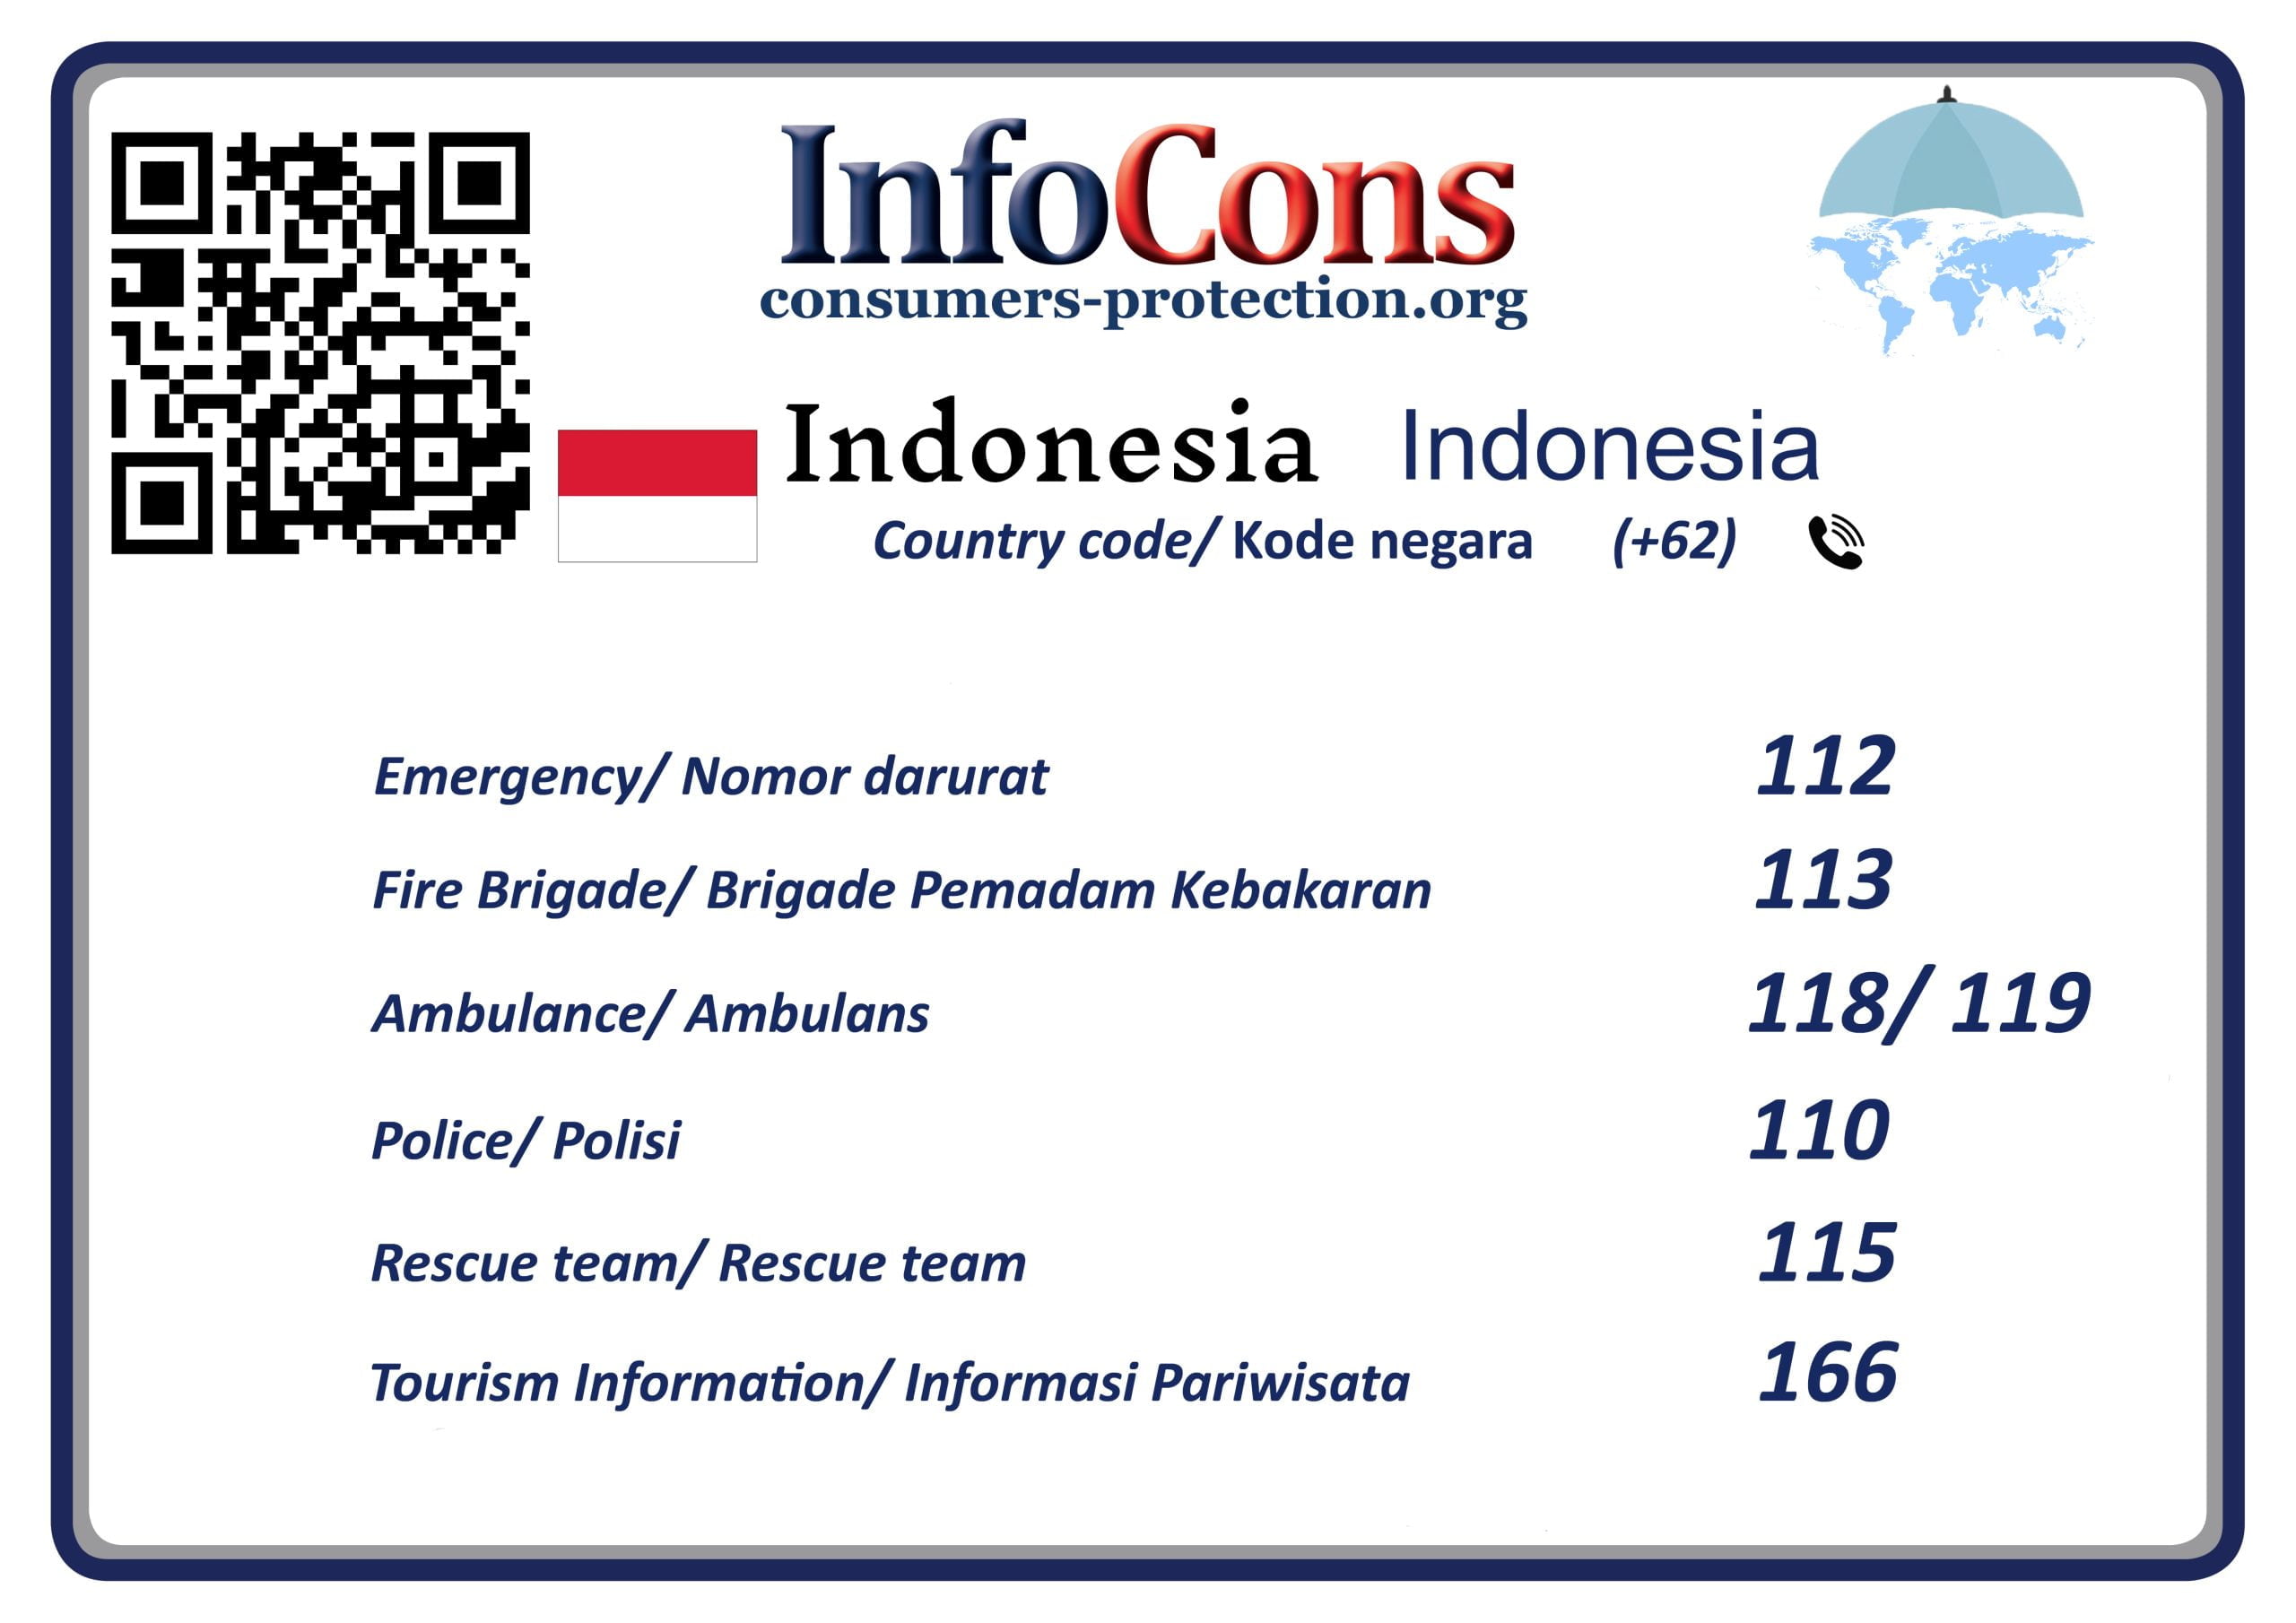 Perlindungan Konsumen Indonesia - Consumers Protection Indonesia